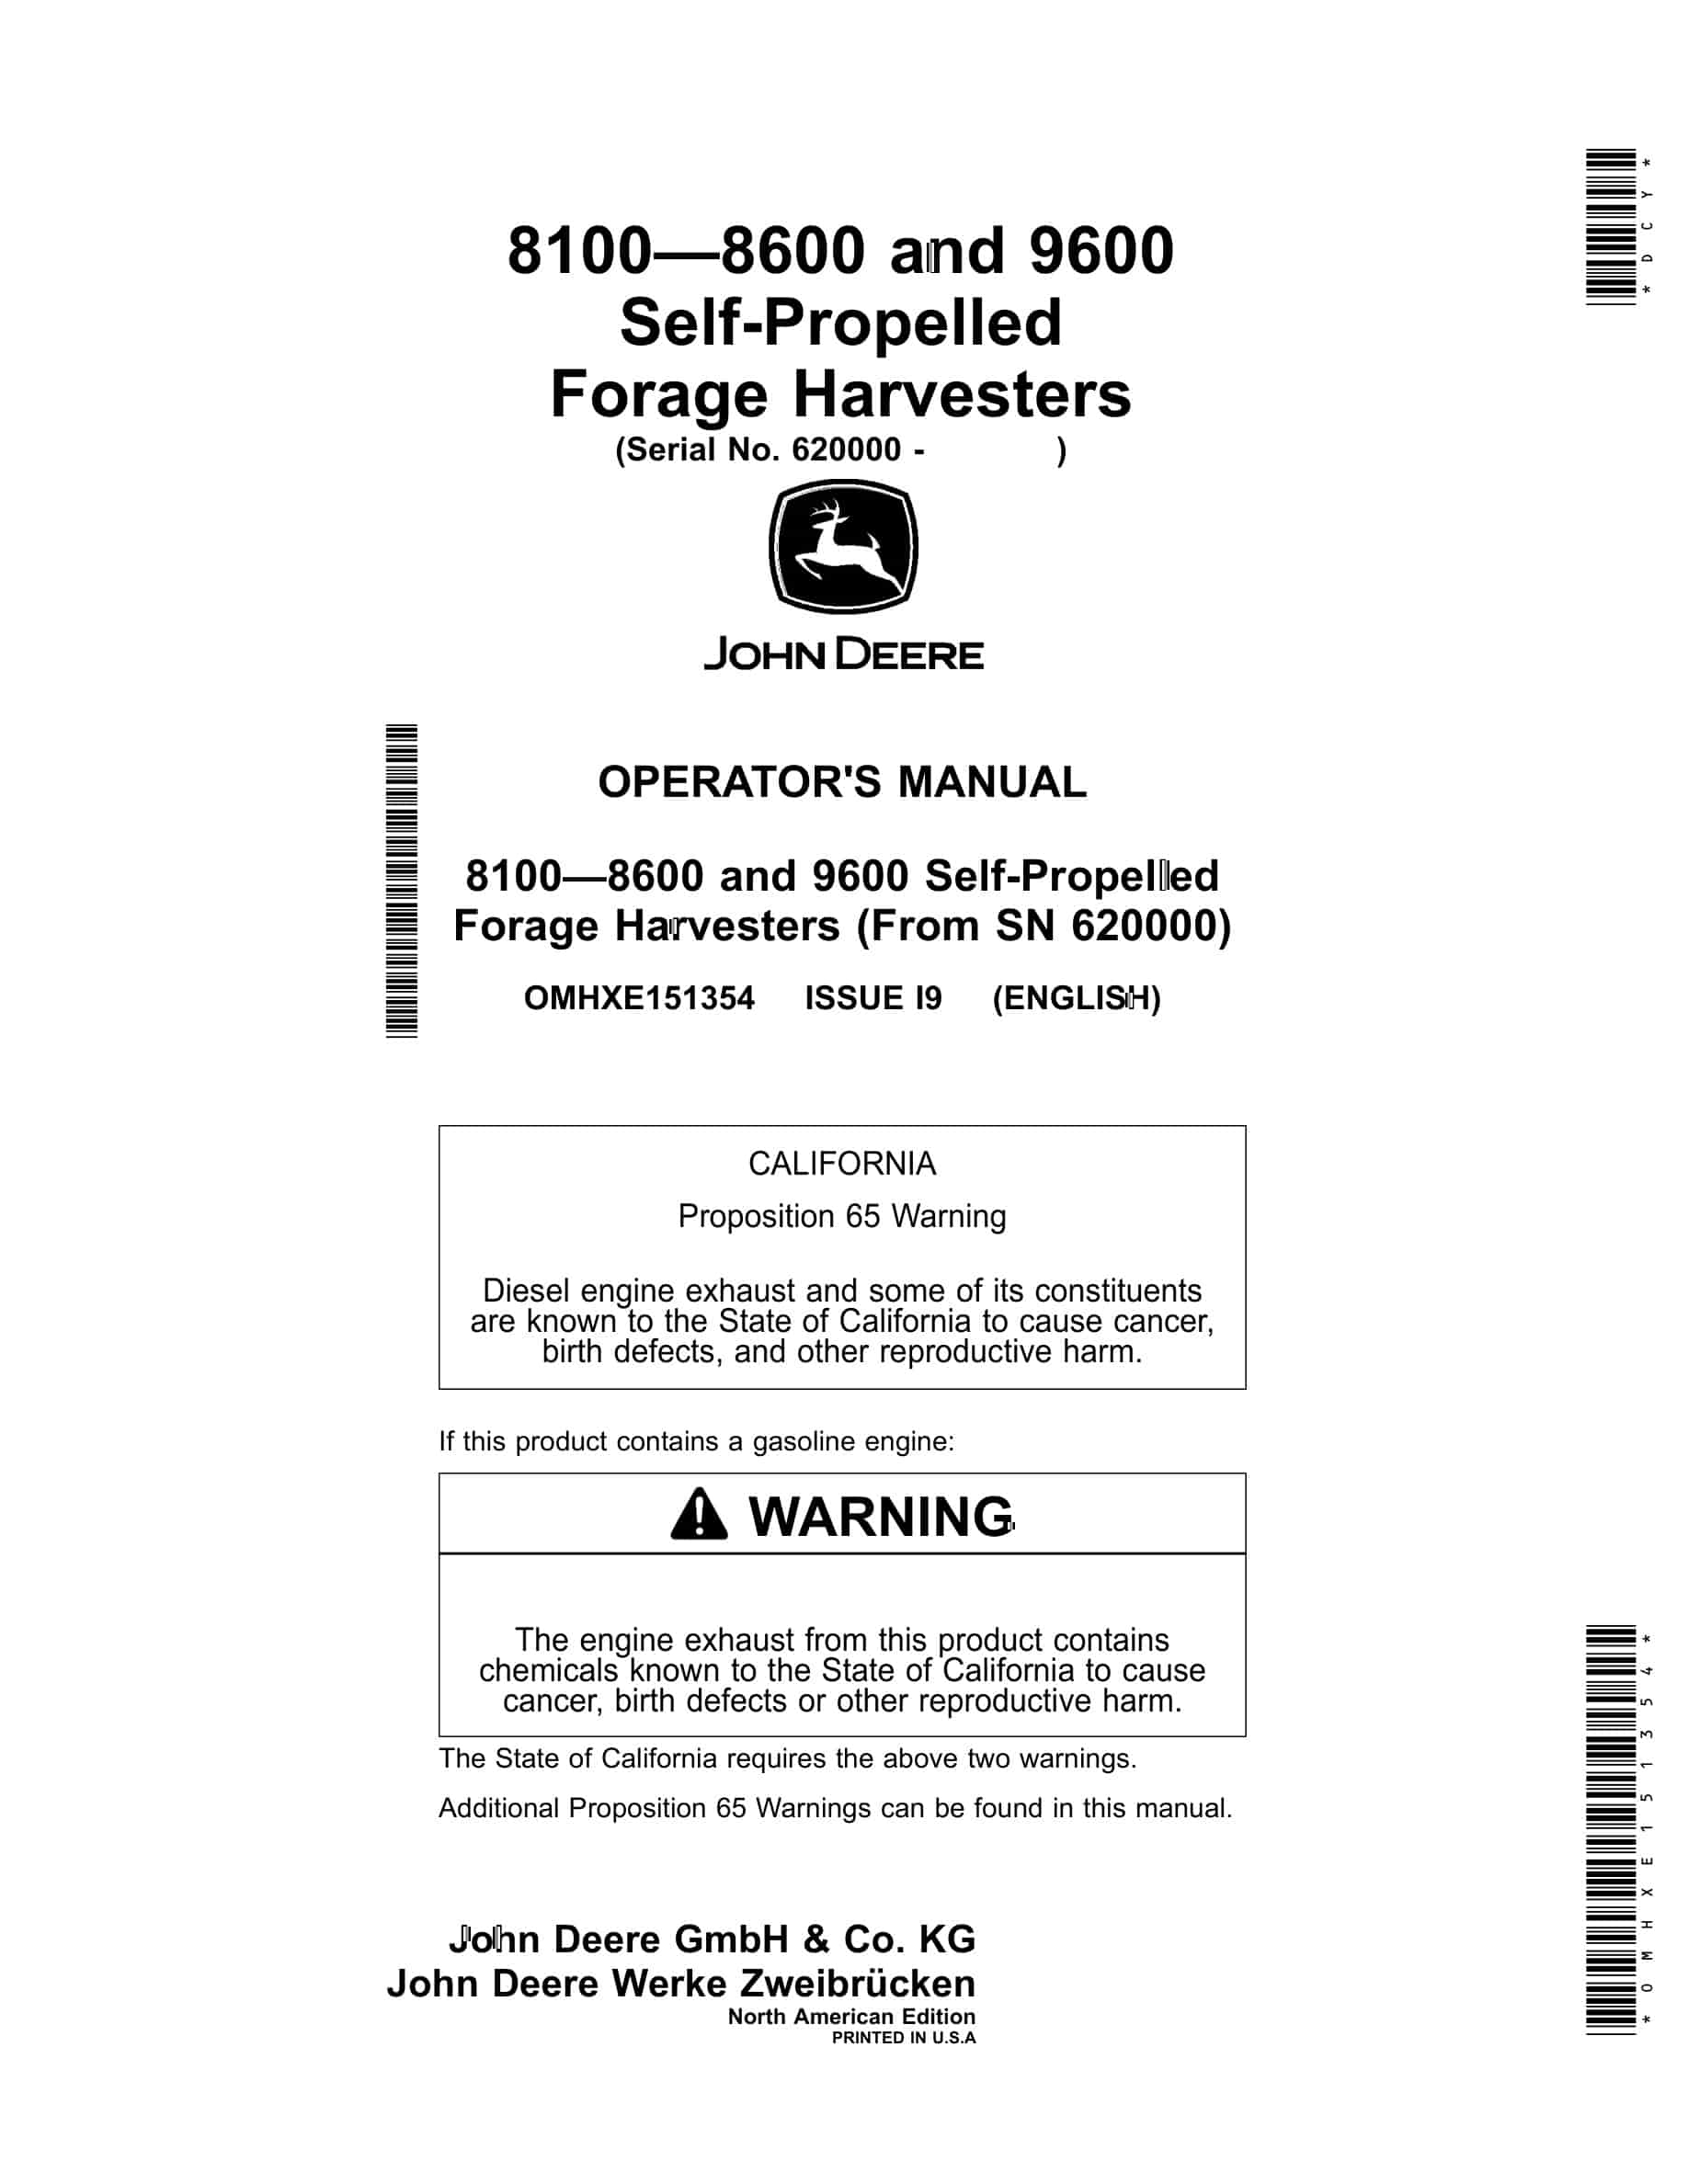 John Deere 8100 – 8600 and 9600 Self-Propelled Forage Harvester Operator Manual OMHXE151354-1